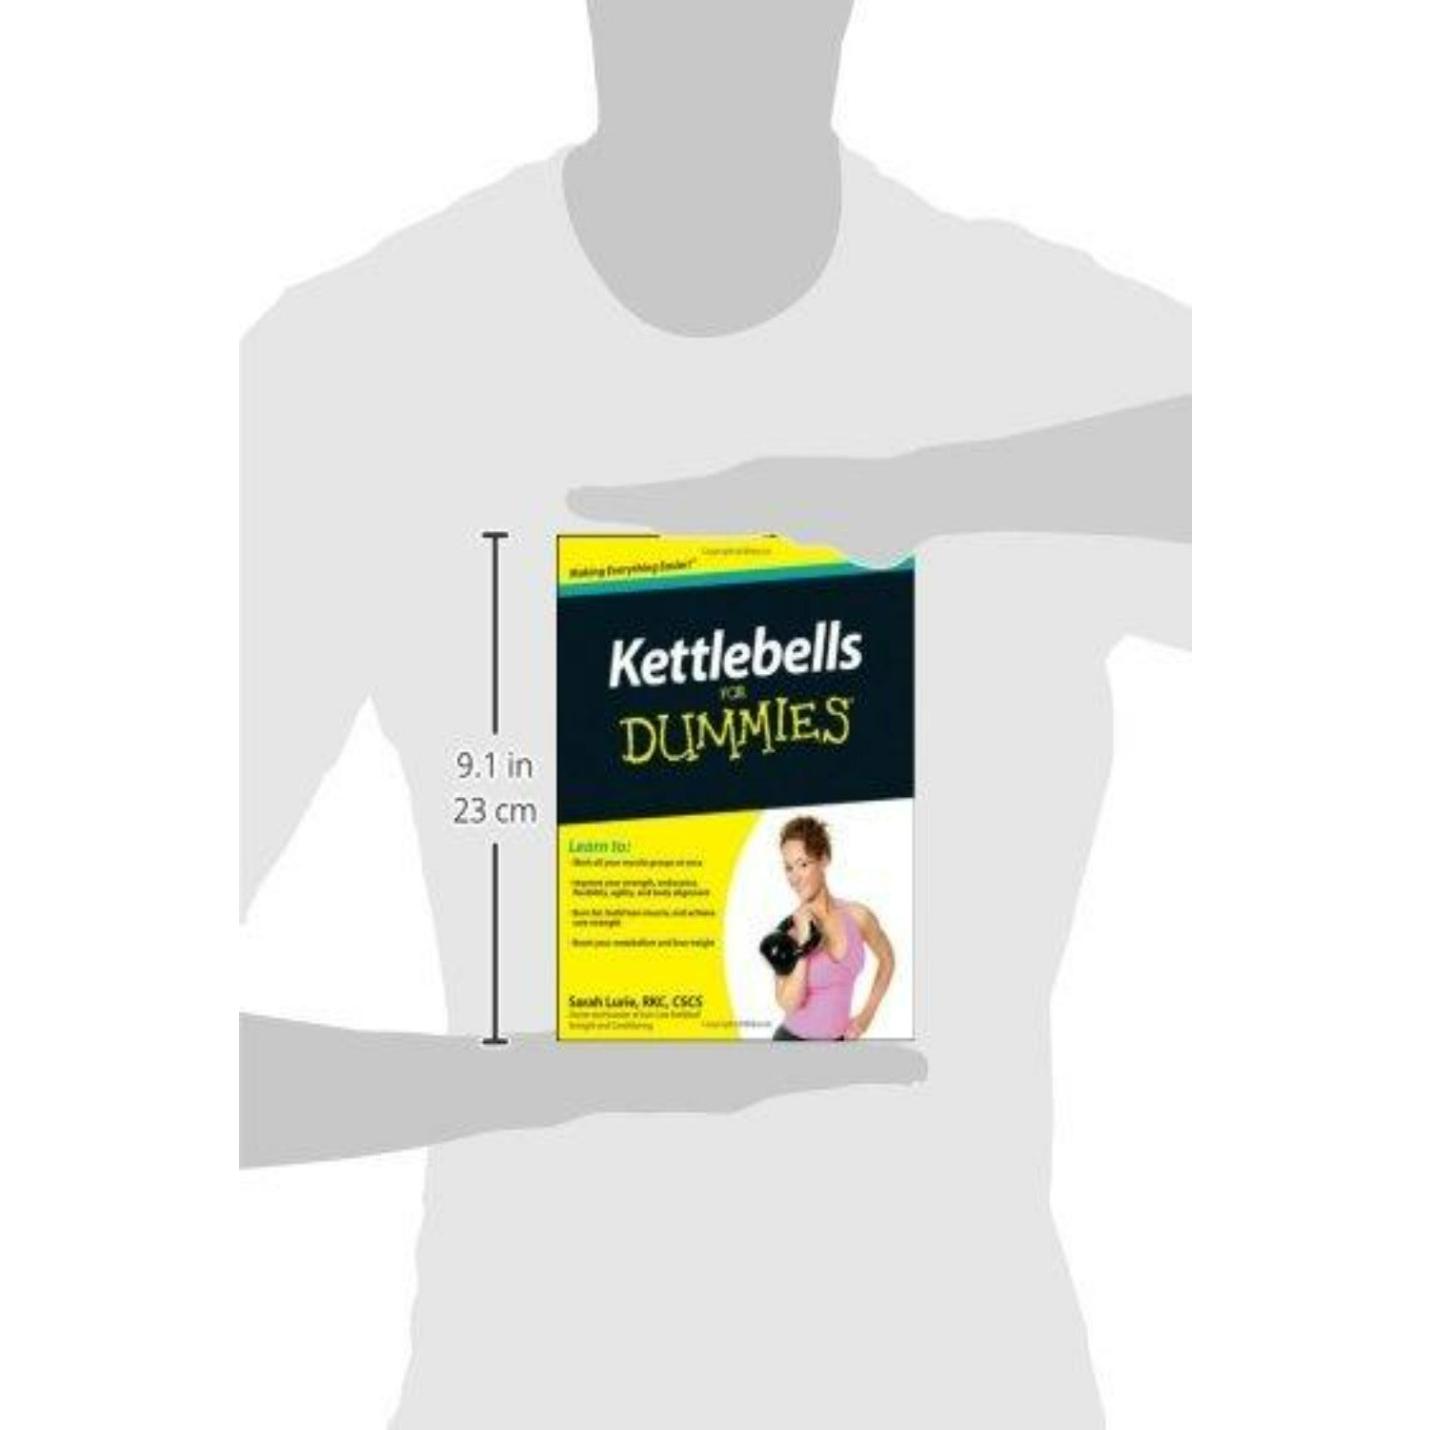 Kettlebells For Dummies - happygetfit.com